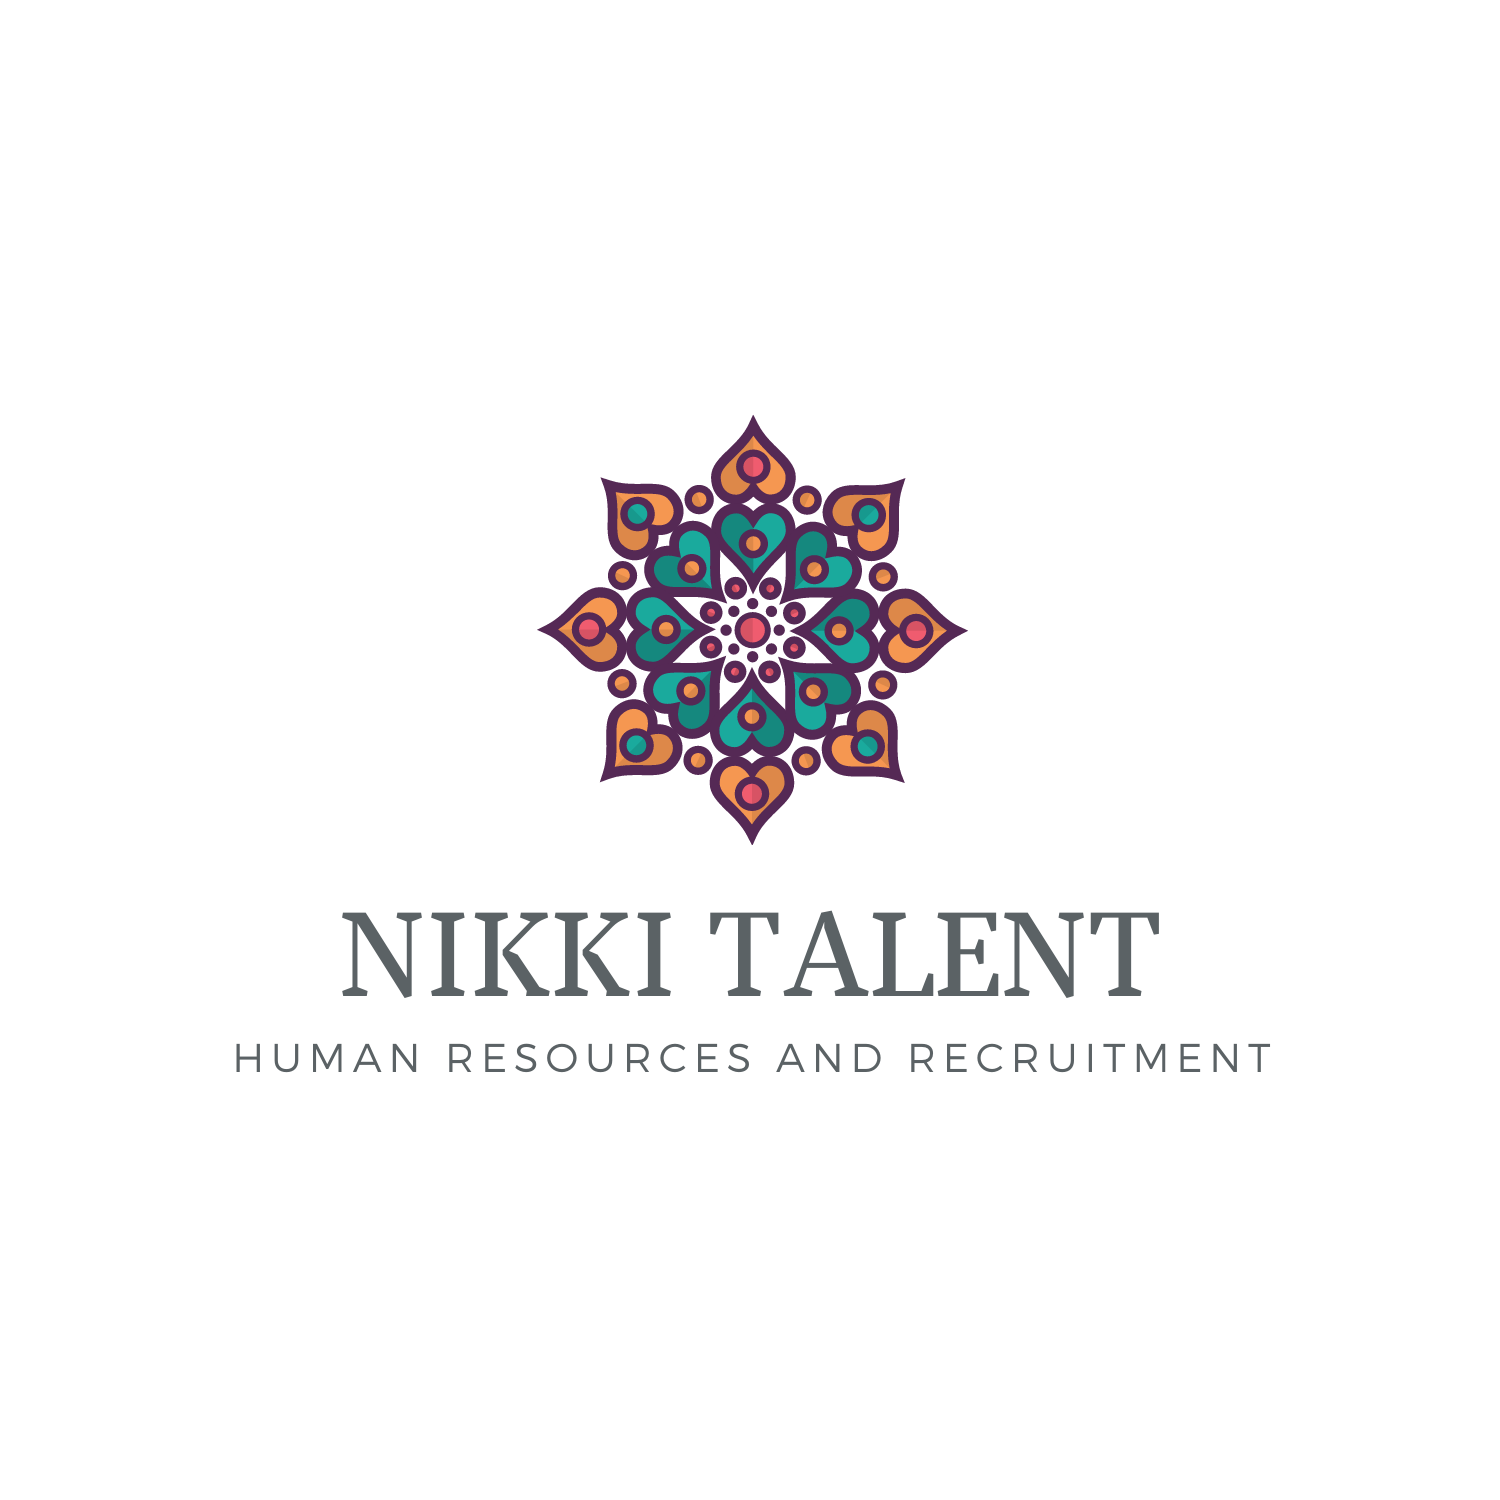 Nikki Talent